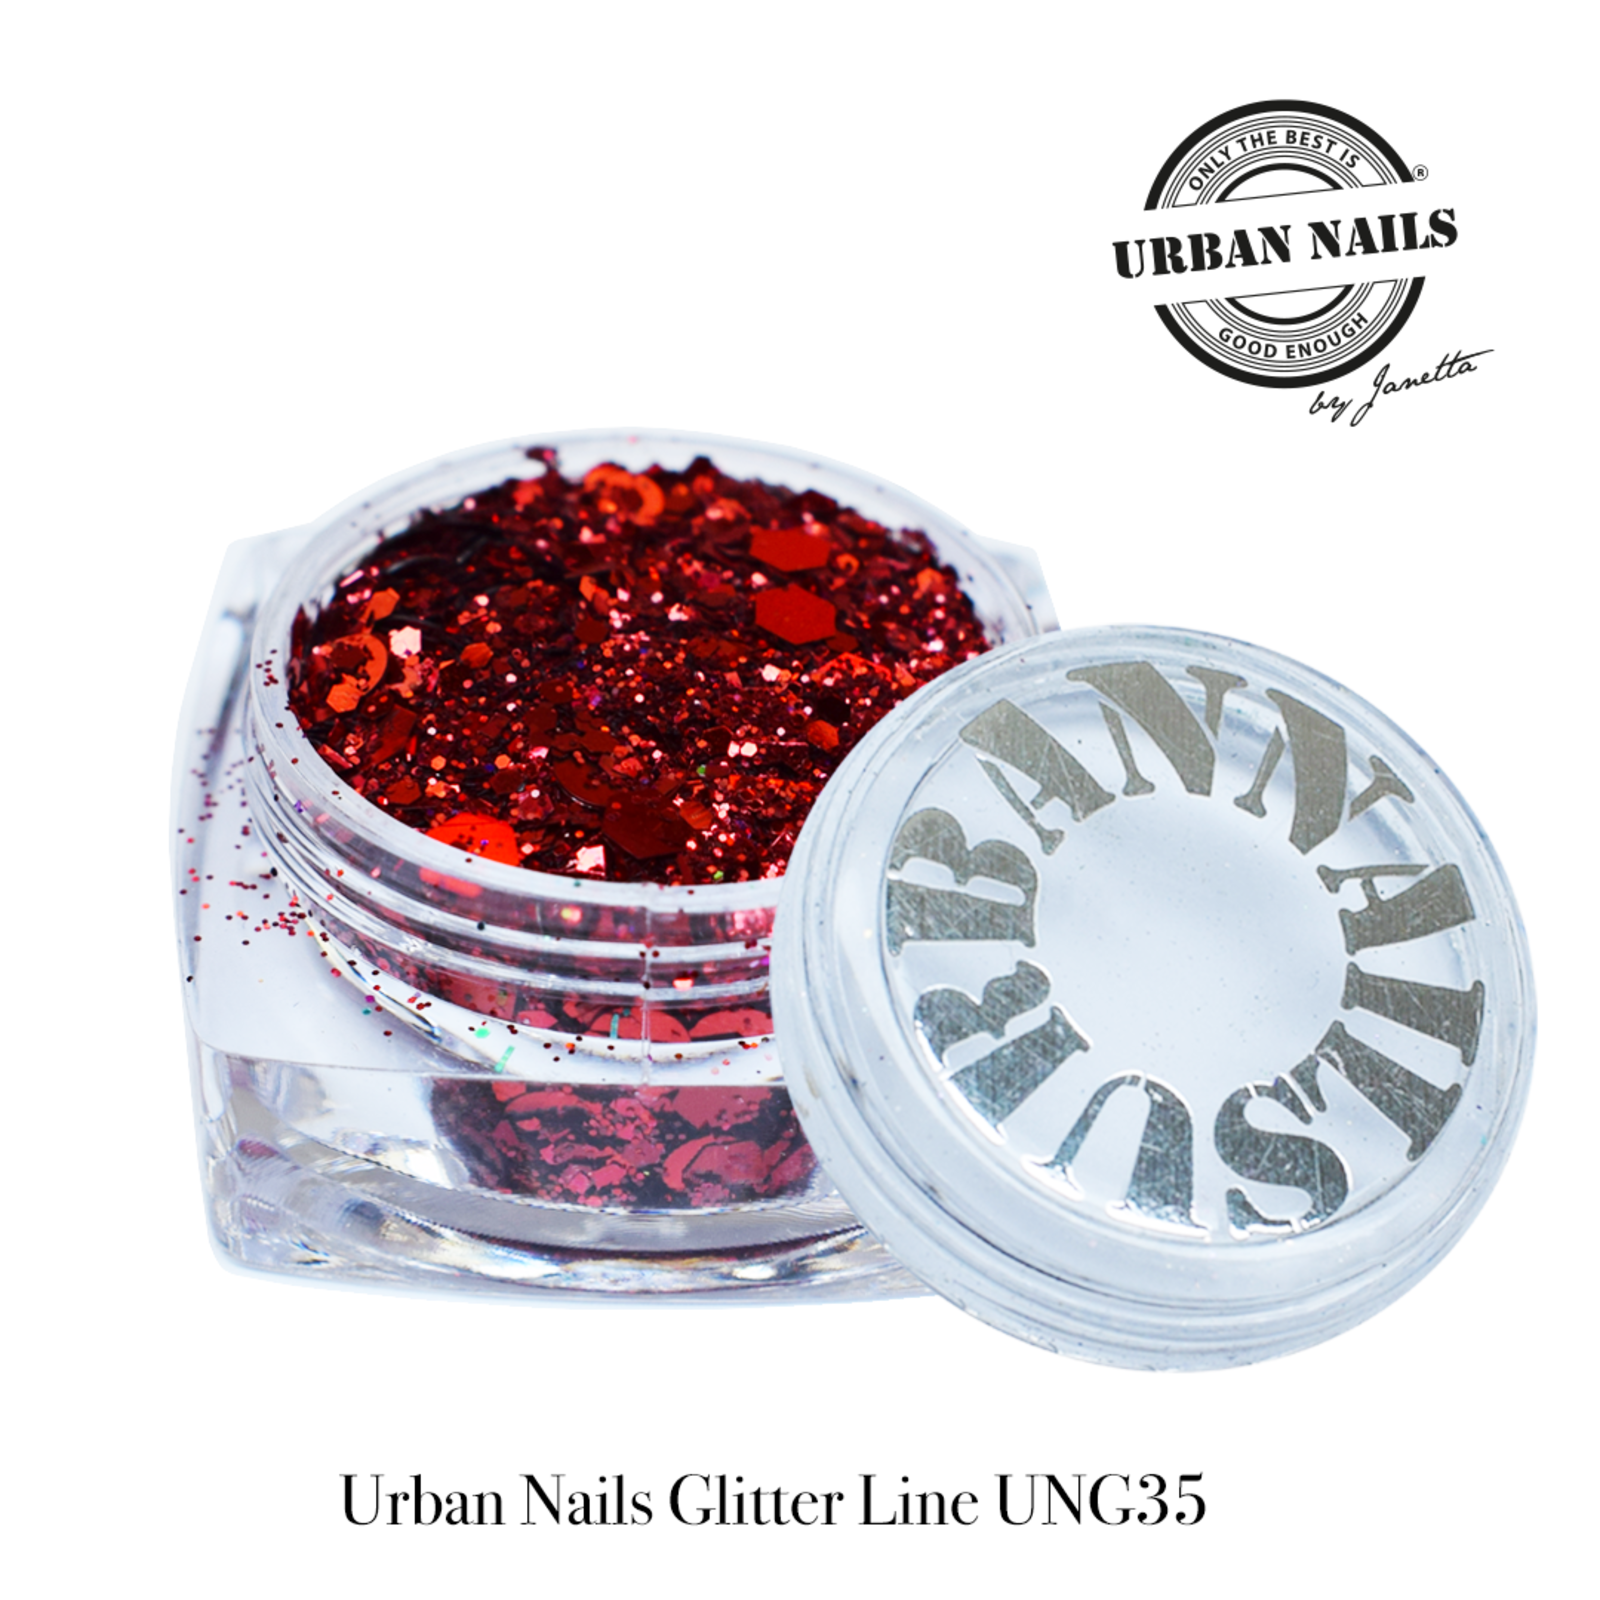 Urban nails Glitter Line UNG35